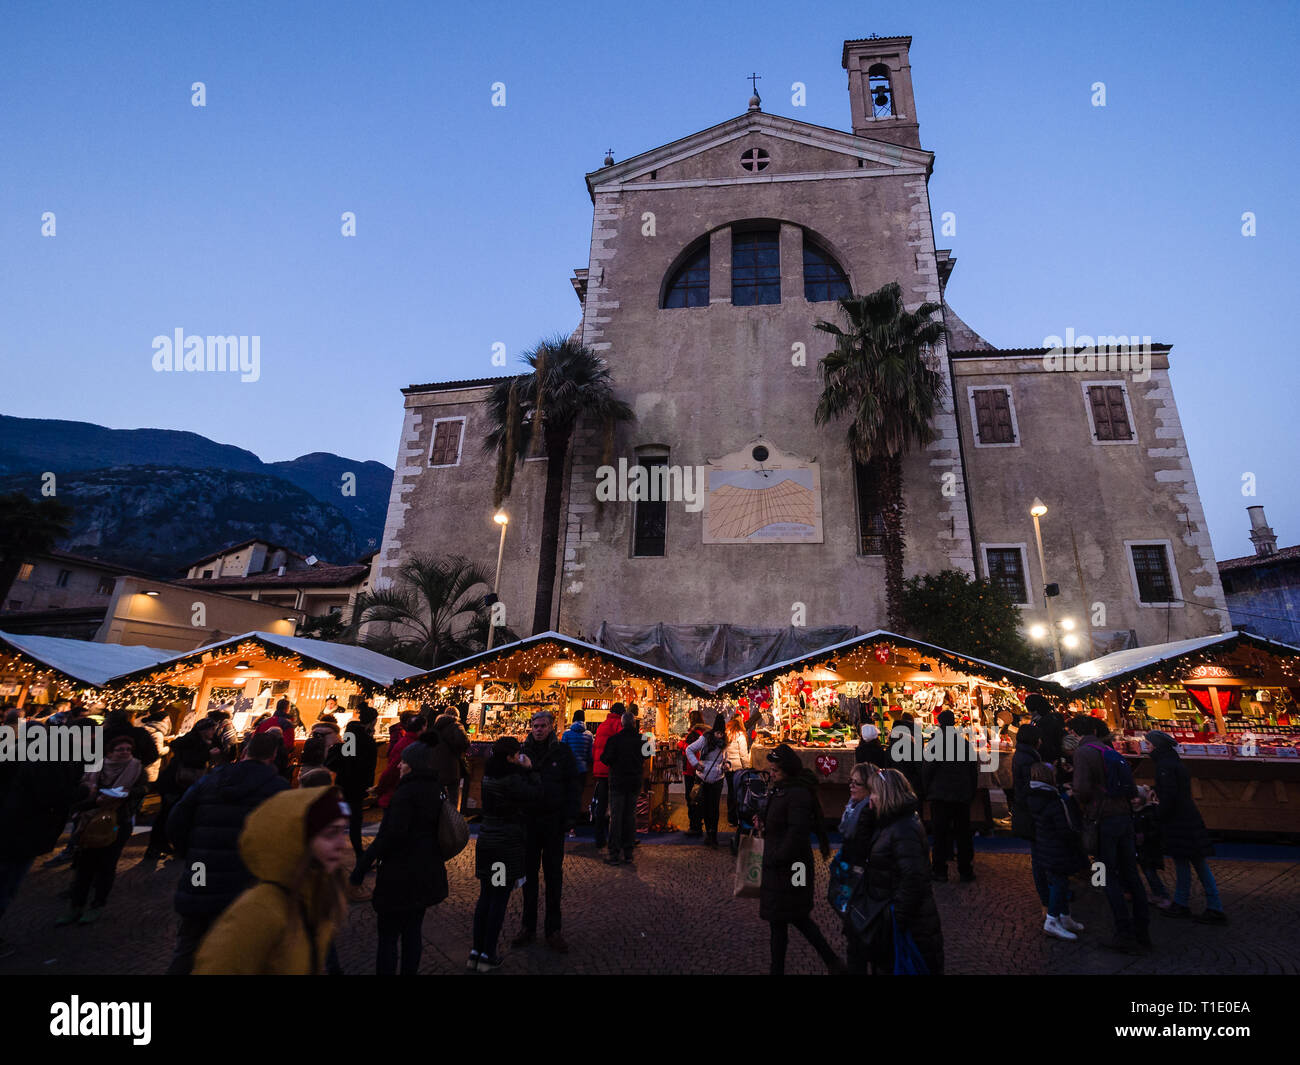 Arco, Italy - November 11, 2017: Characteristic Christmas markets in the main square. Stock Photo